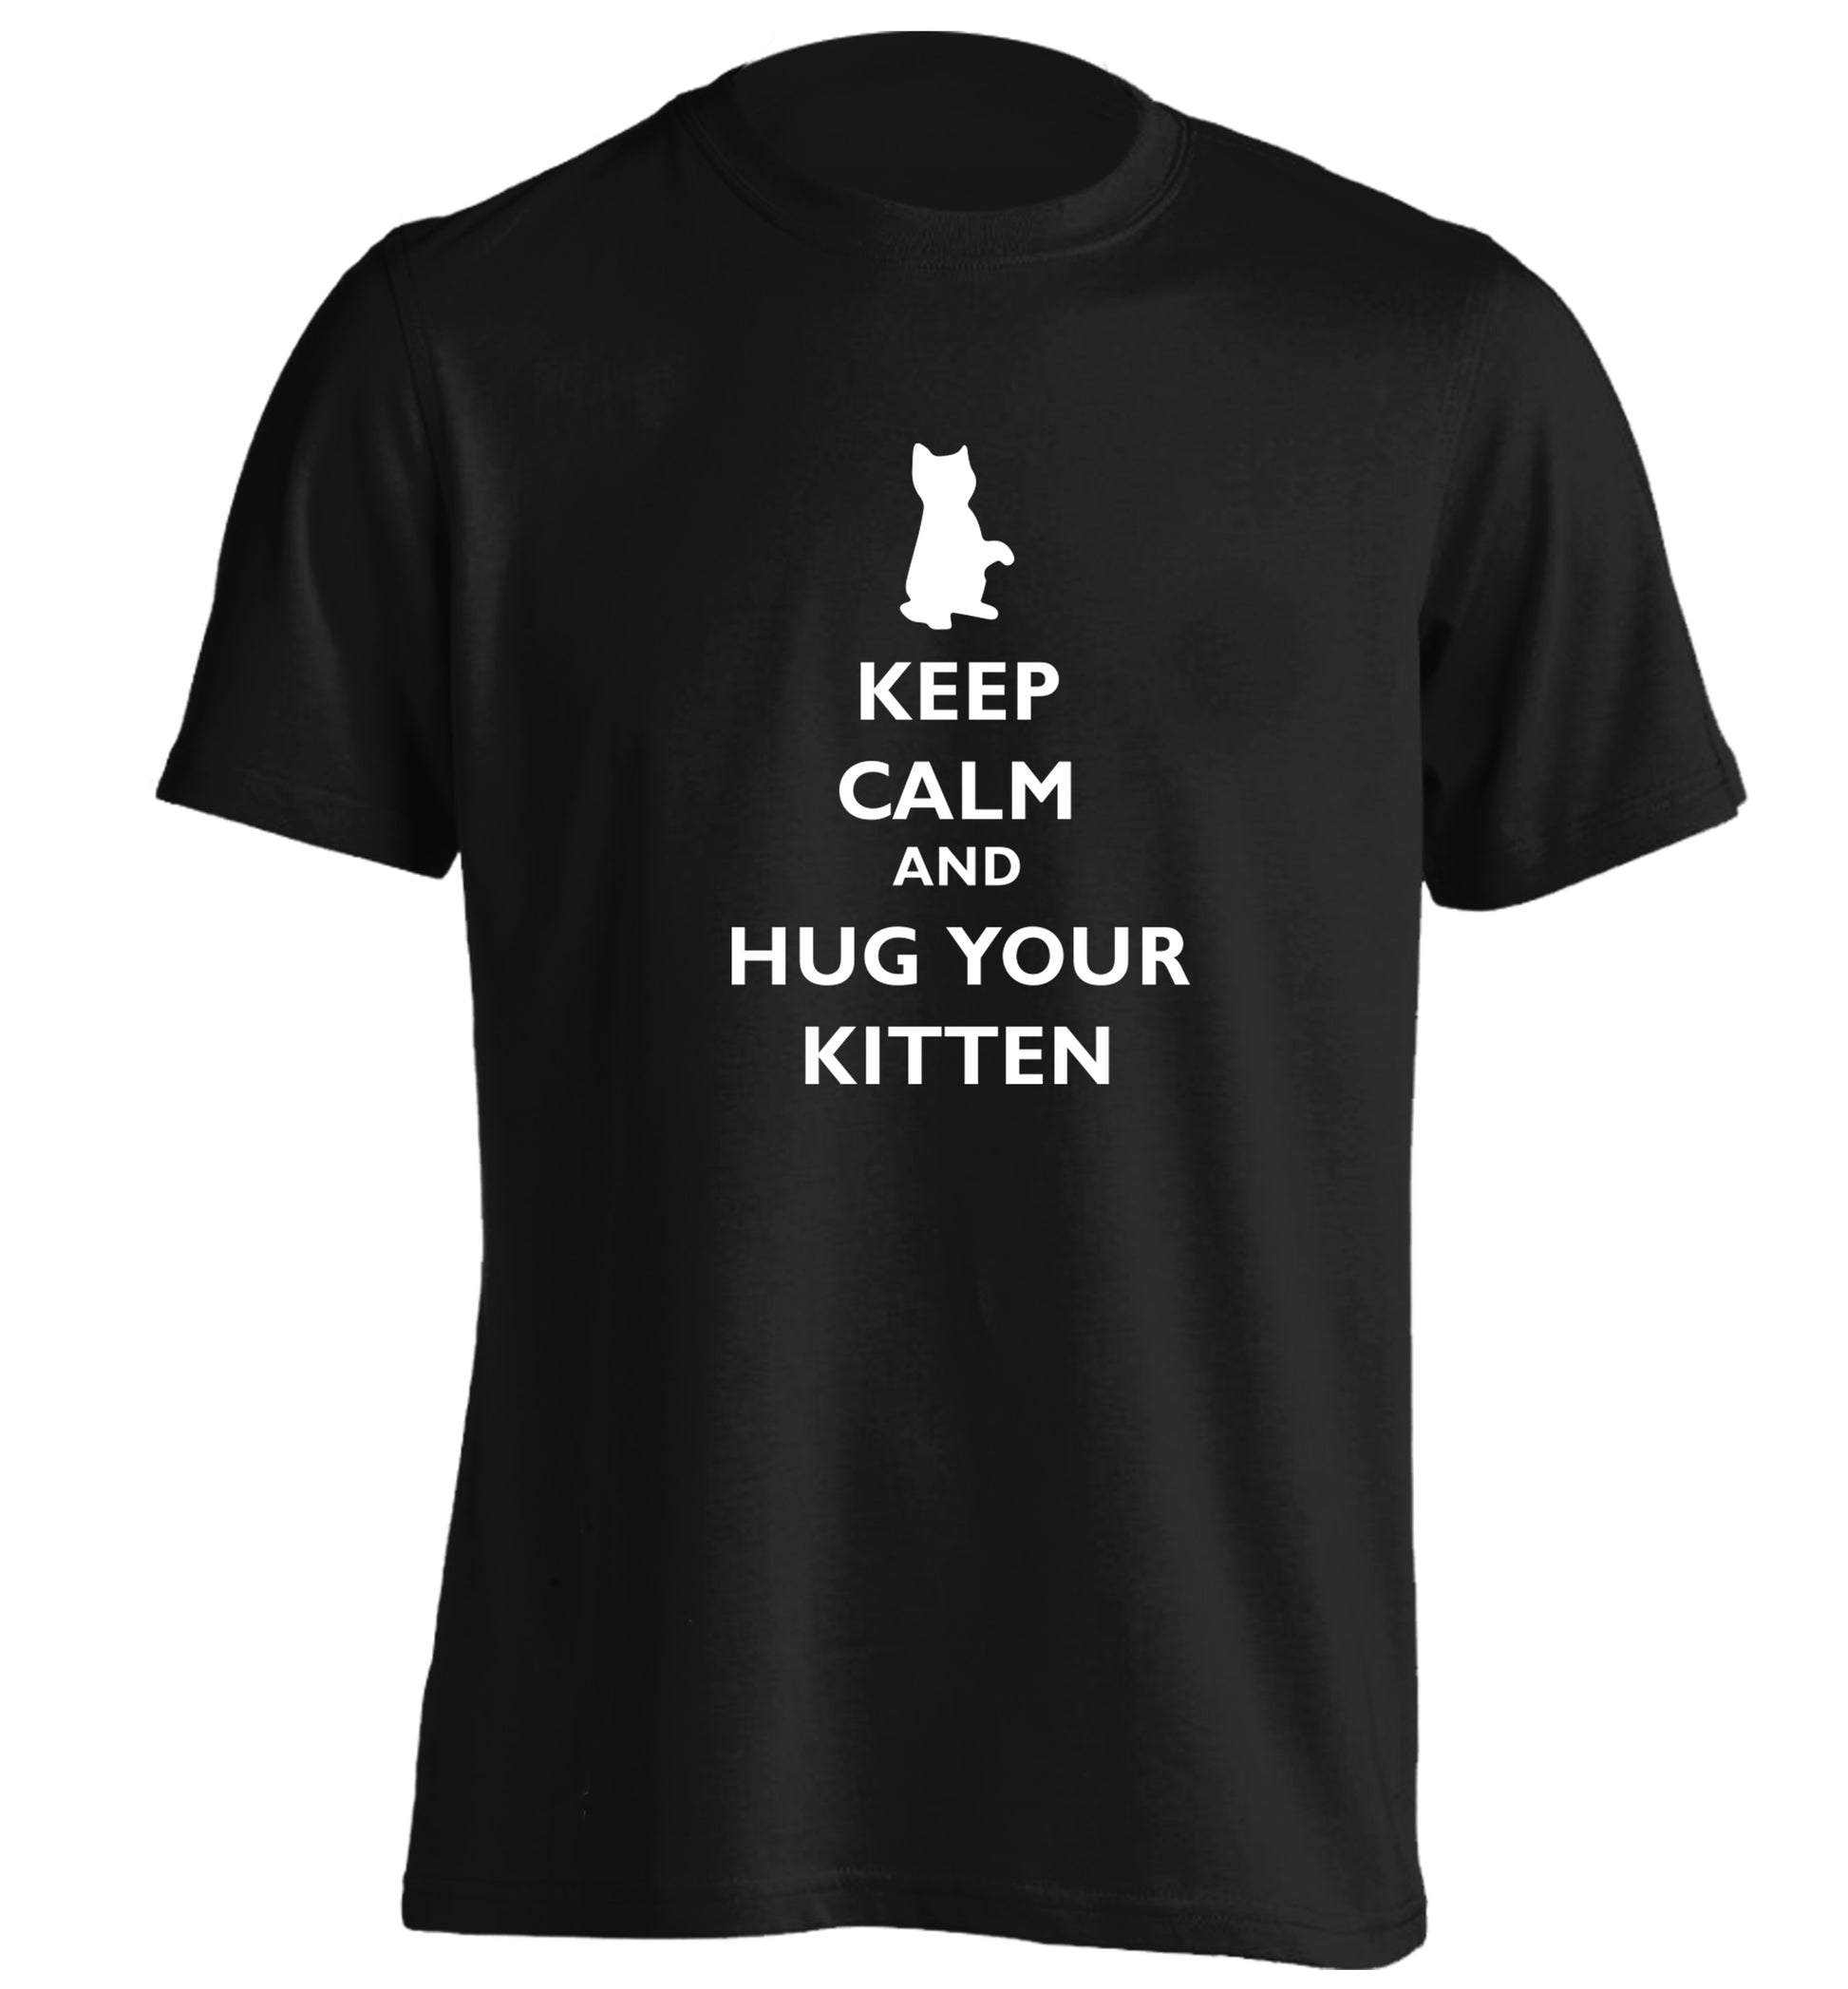 Keep calm and hug your kitten adults unisex black Tshirt 2XL